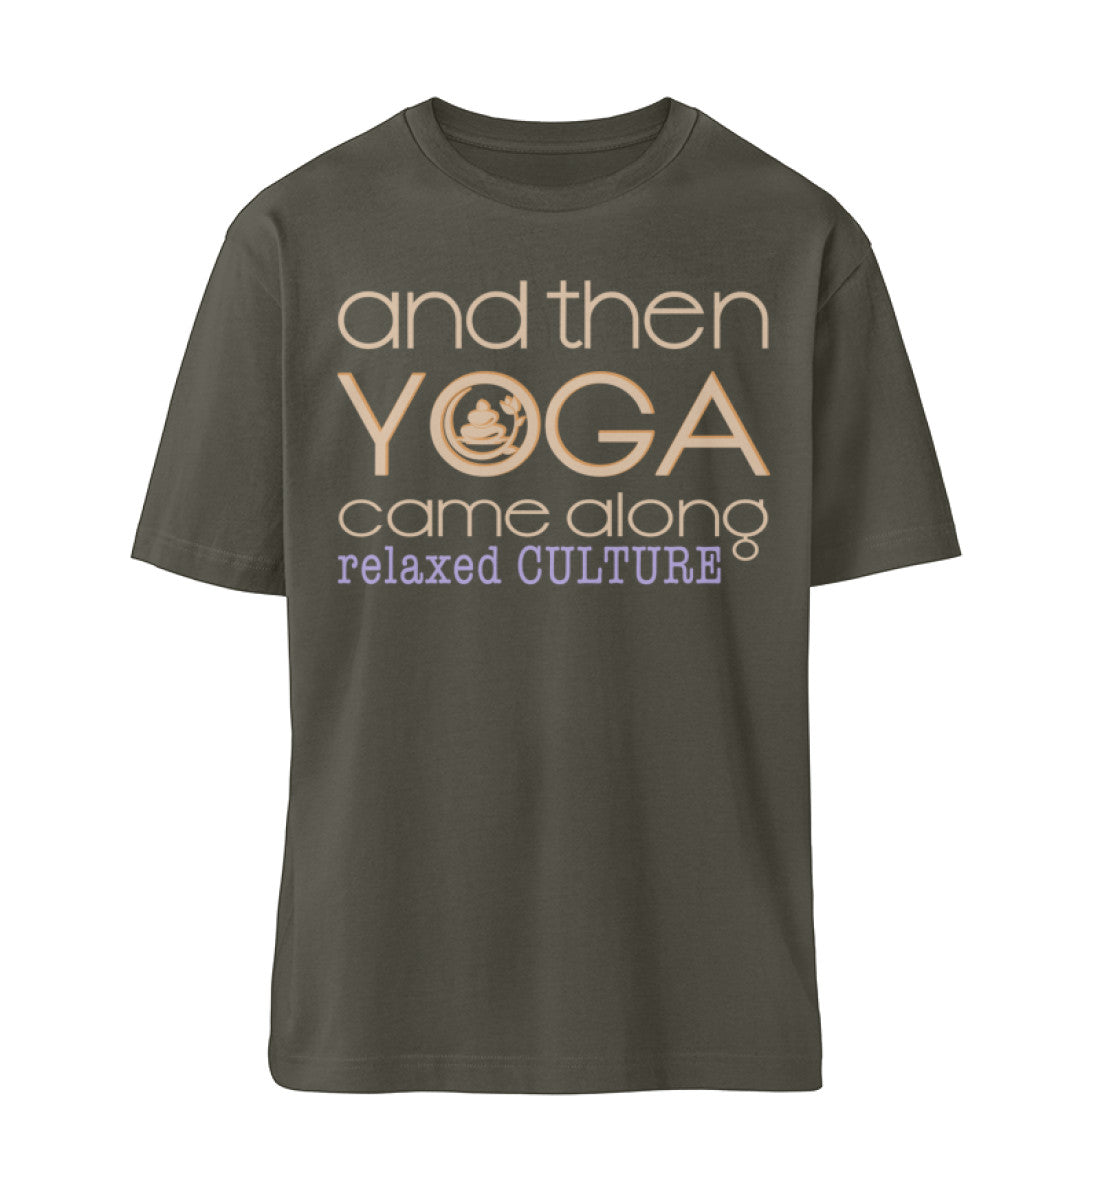 Khaki T-Shirt Unisex Relaxed Fit für Frauen und Männer bedruckt mit dem Design der Roger Rockawoo Kollektion and then yoga along